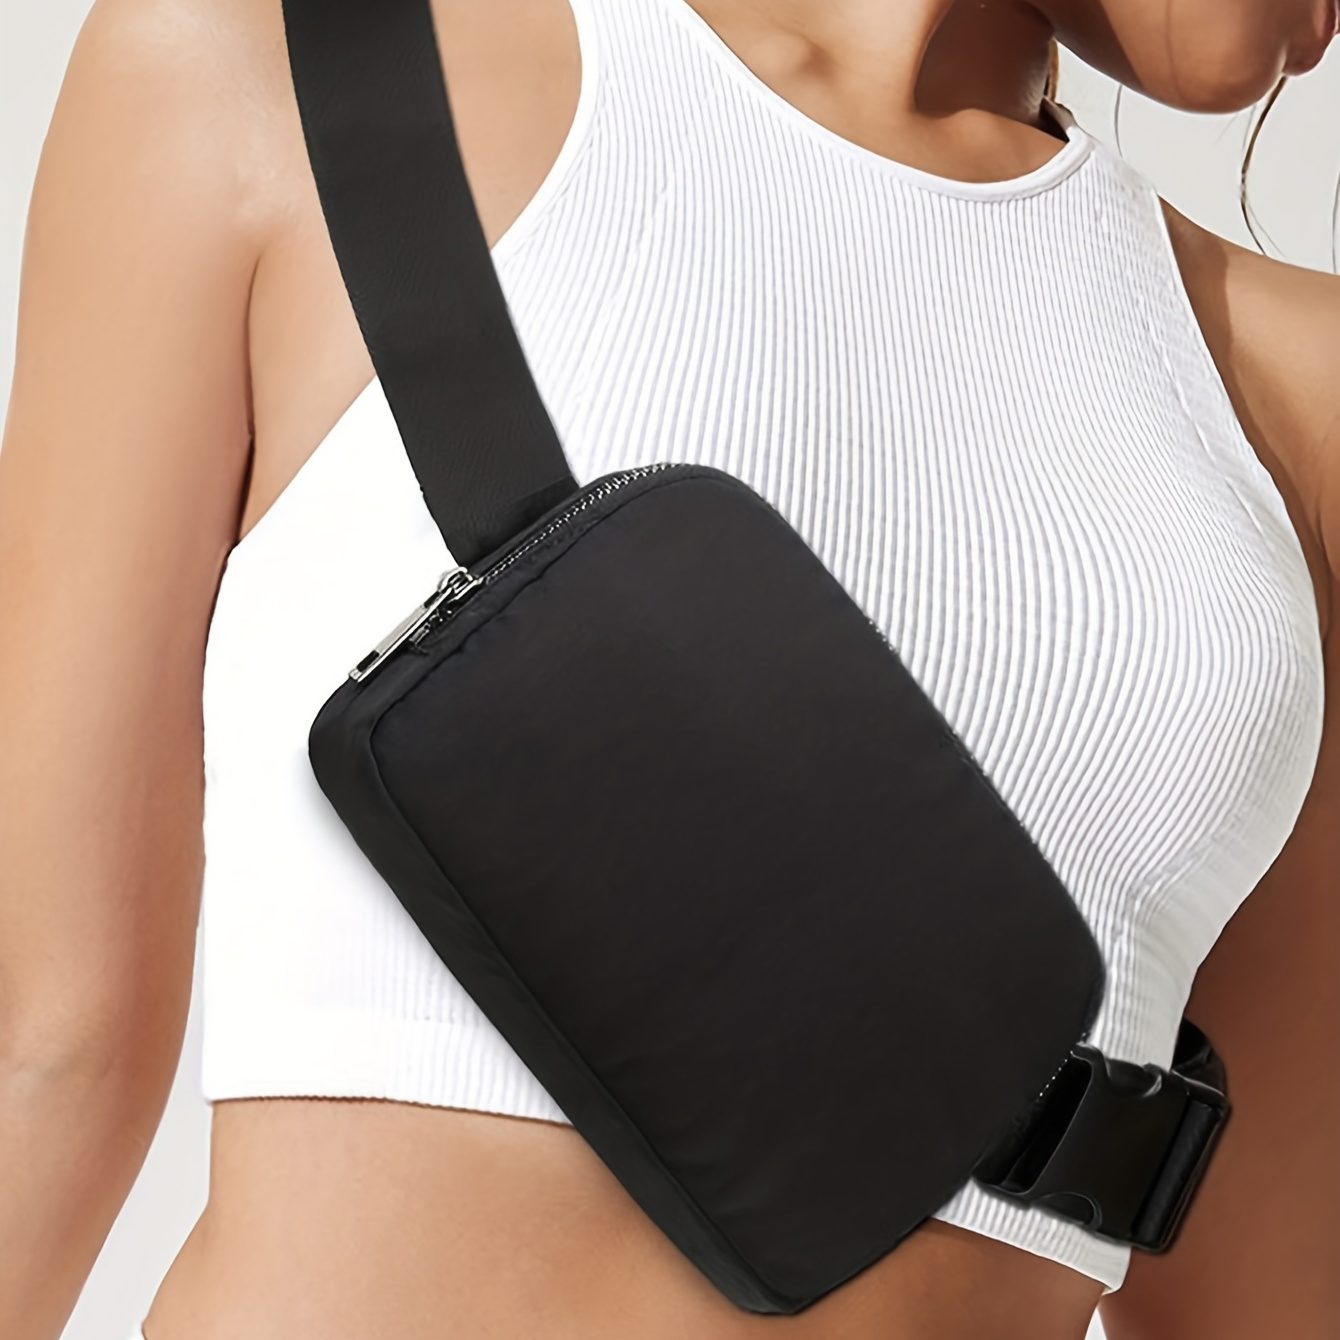  M MOTIKUL Belt Bag for Women Fashion Crossbody Fanny Packs  Causal Waist Hip Bum Bag Leather Chest Daypack Purses Travel Pouch Sling Backpack  Bag